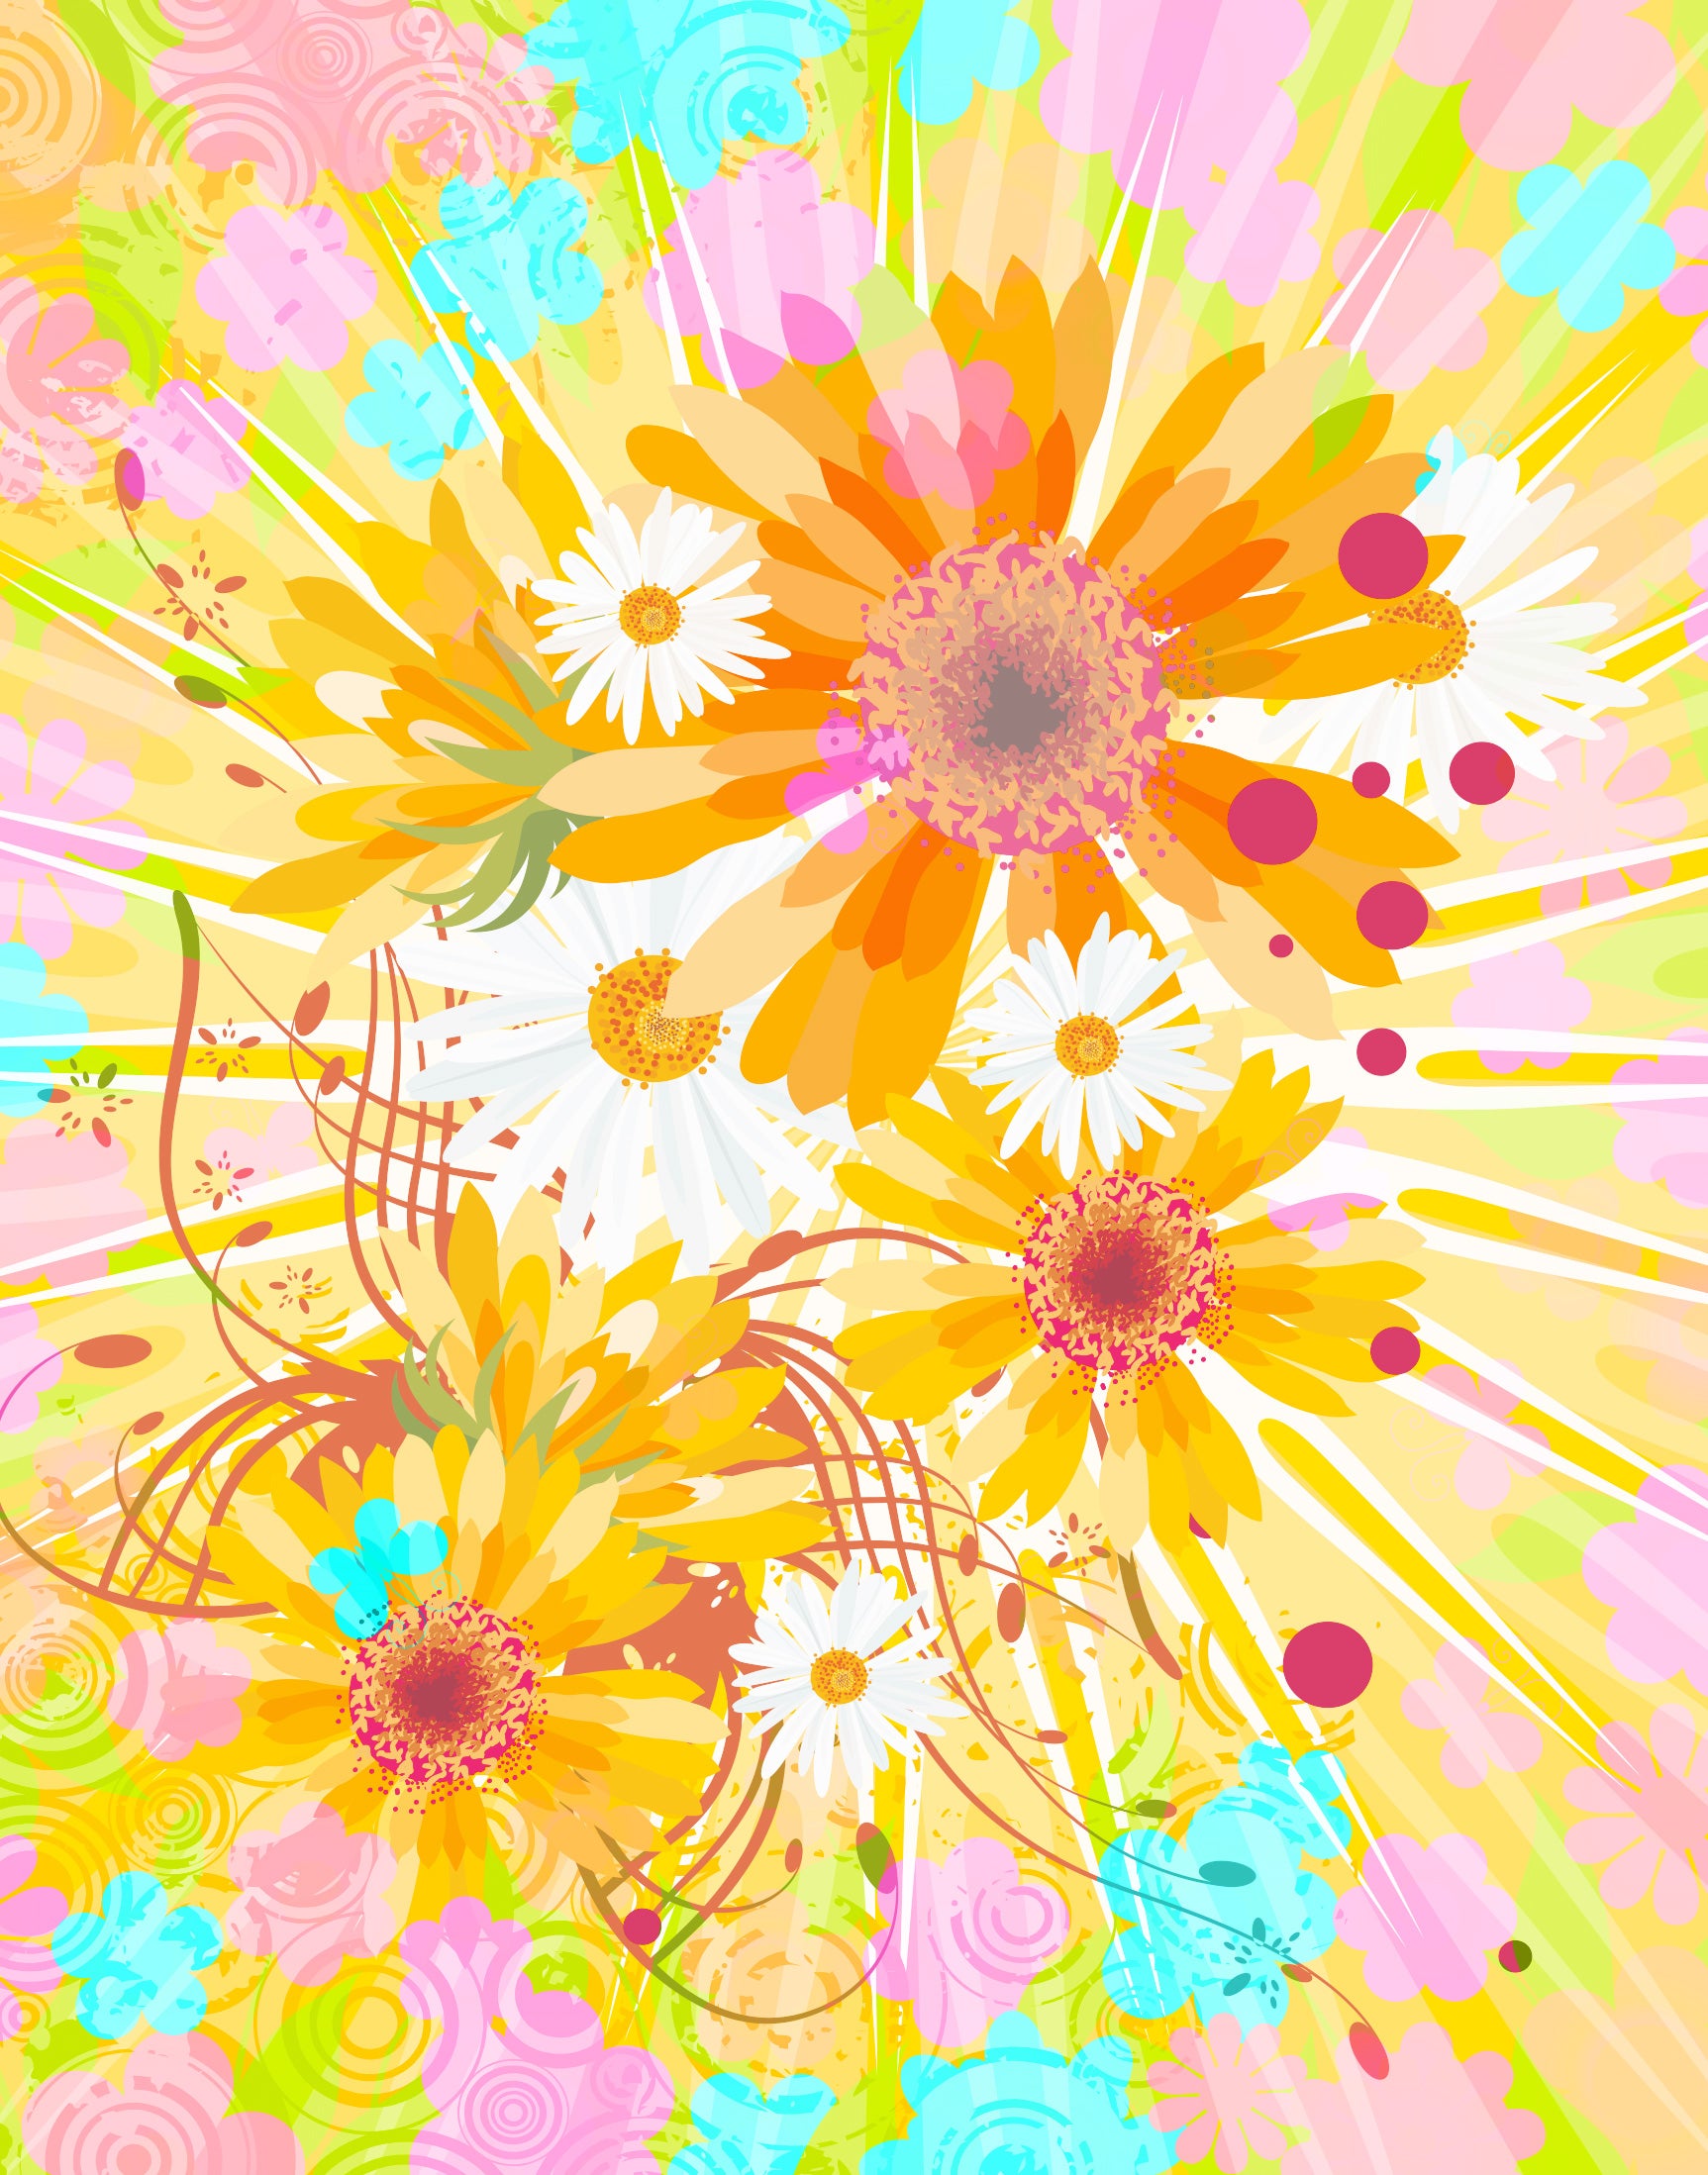 Vibrant Sunflowers - Puzzleyourpet